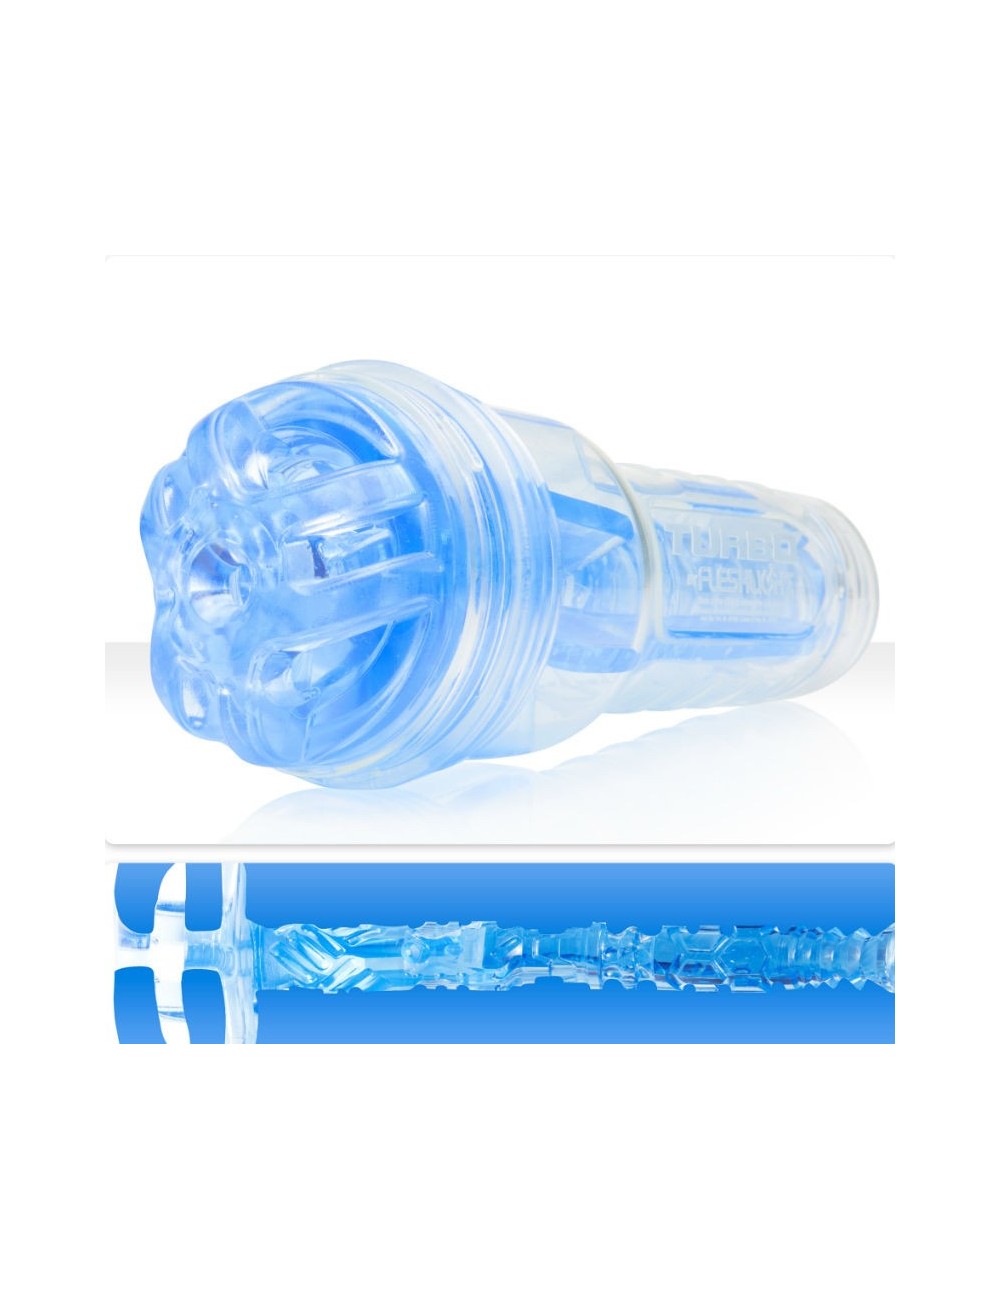 Sextoys - Masturbateurs & Stimulateurs - FLESHLIGHT TURBO ALLUMAGE BLUE ICE - Fleshlight